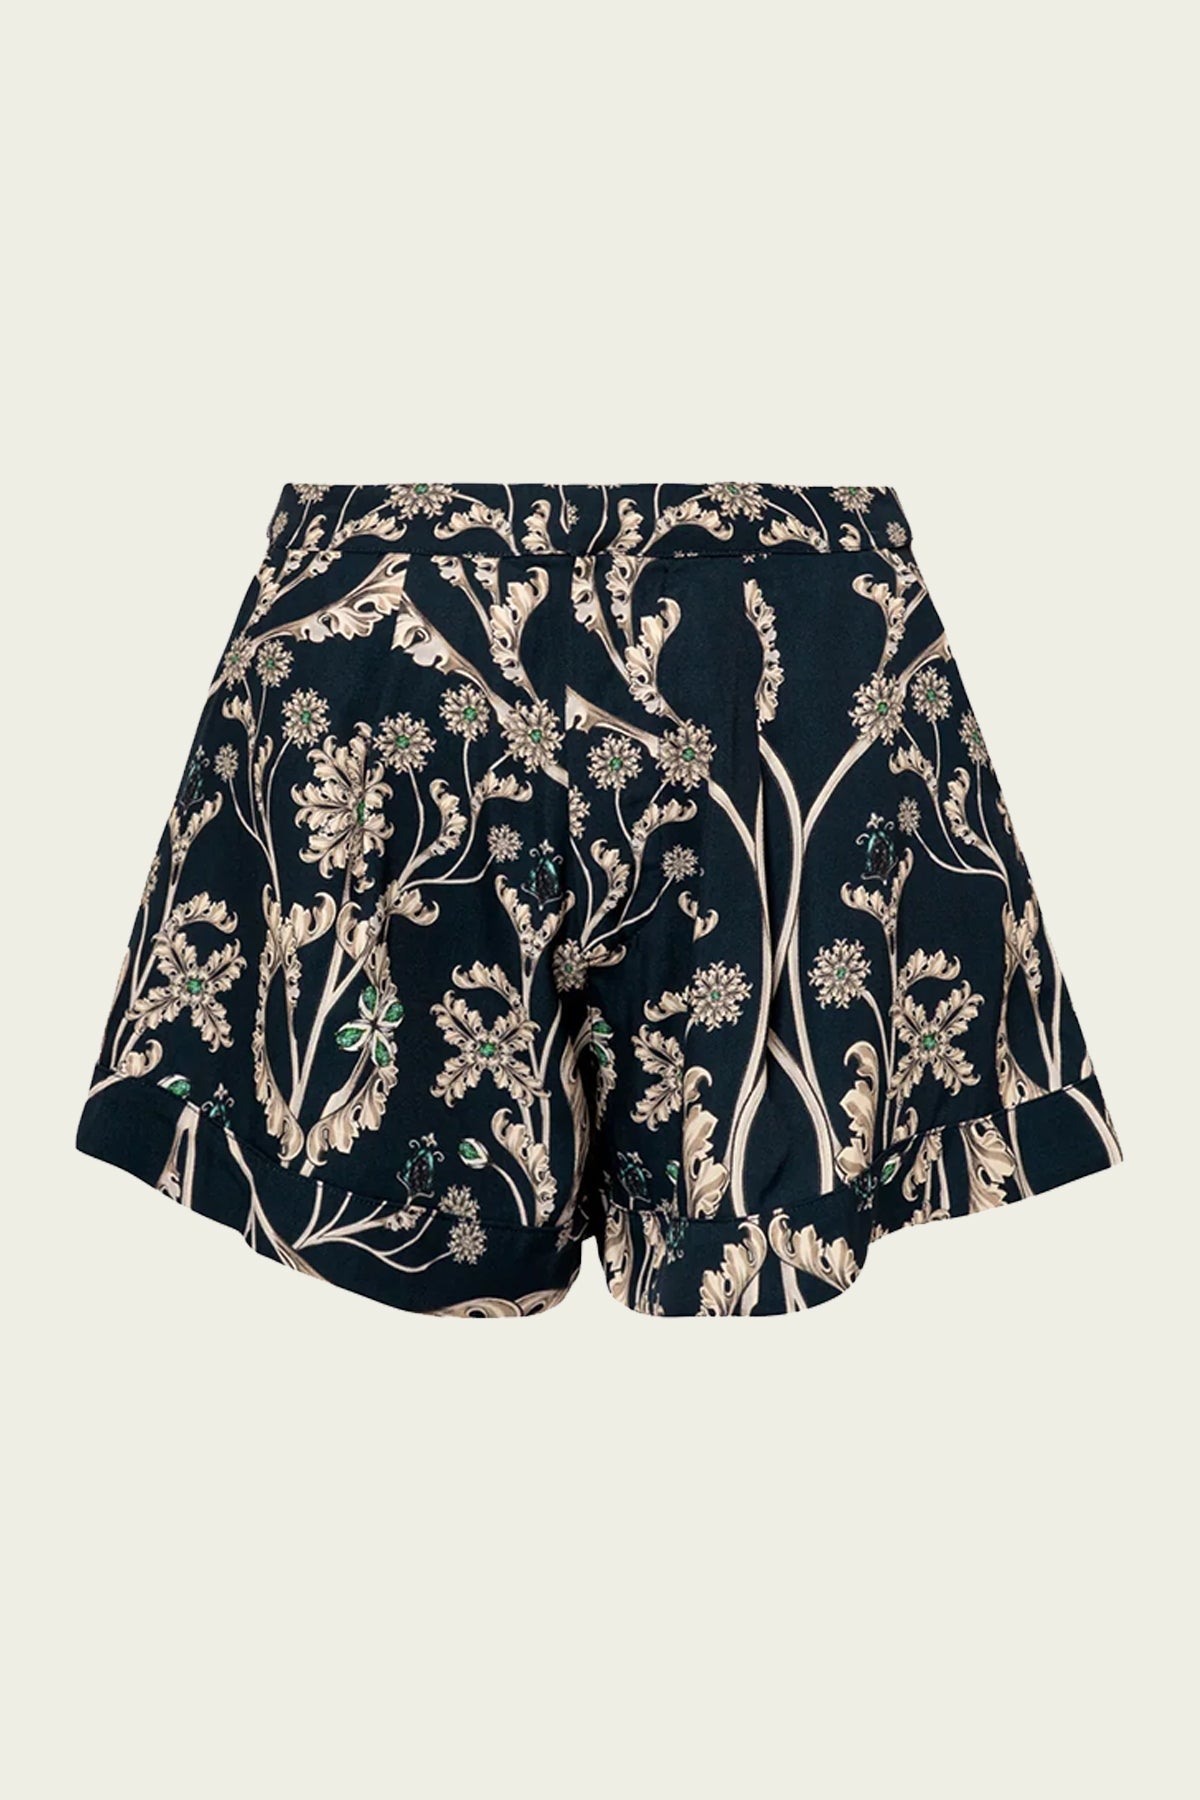 Toronjil Gema Shorts in Multicolor - shop-olivia.com